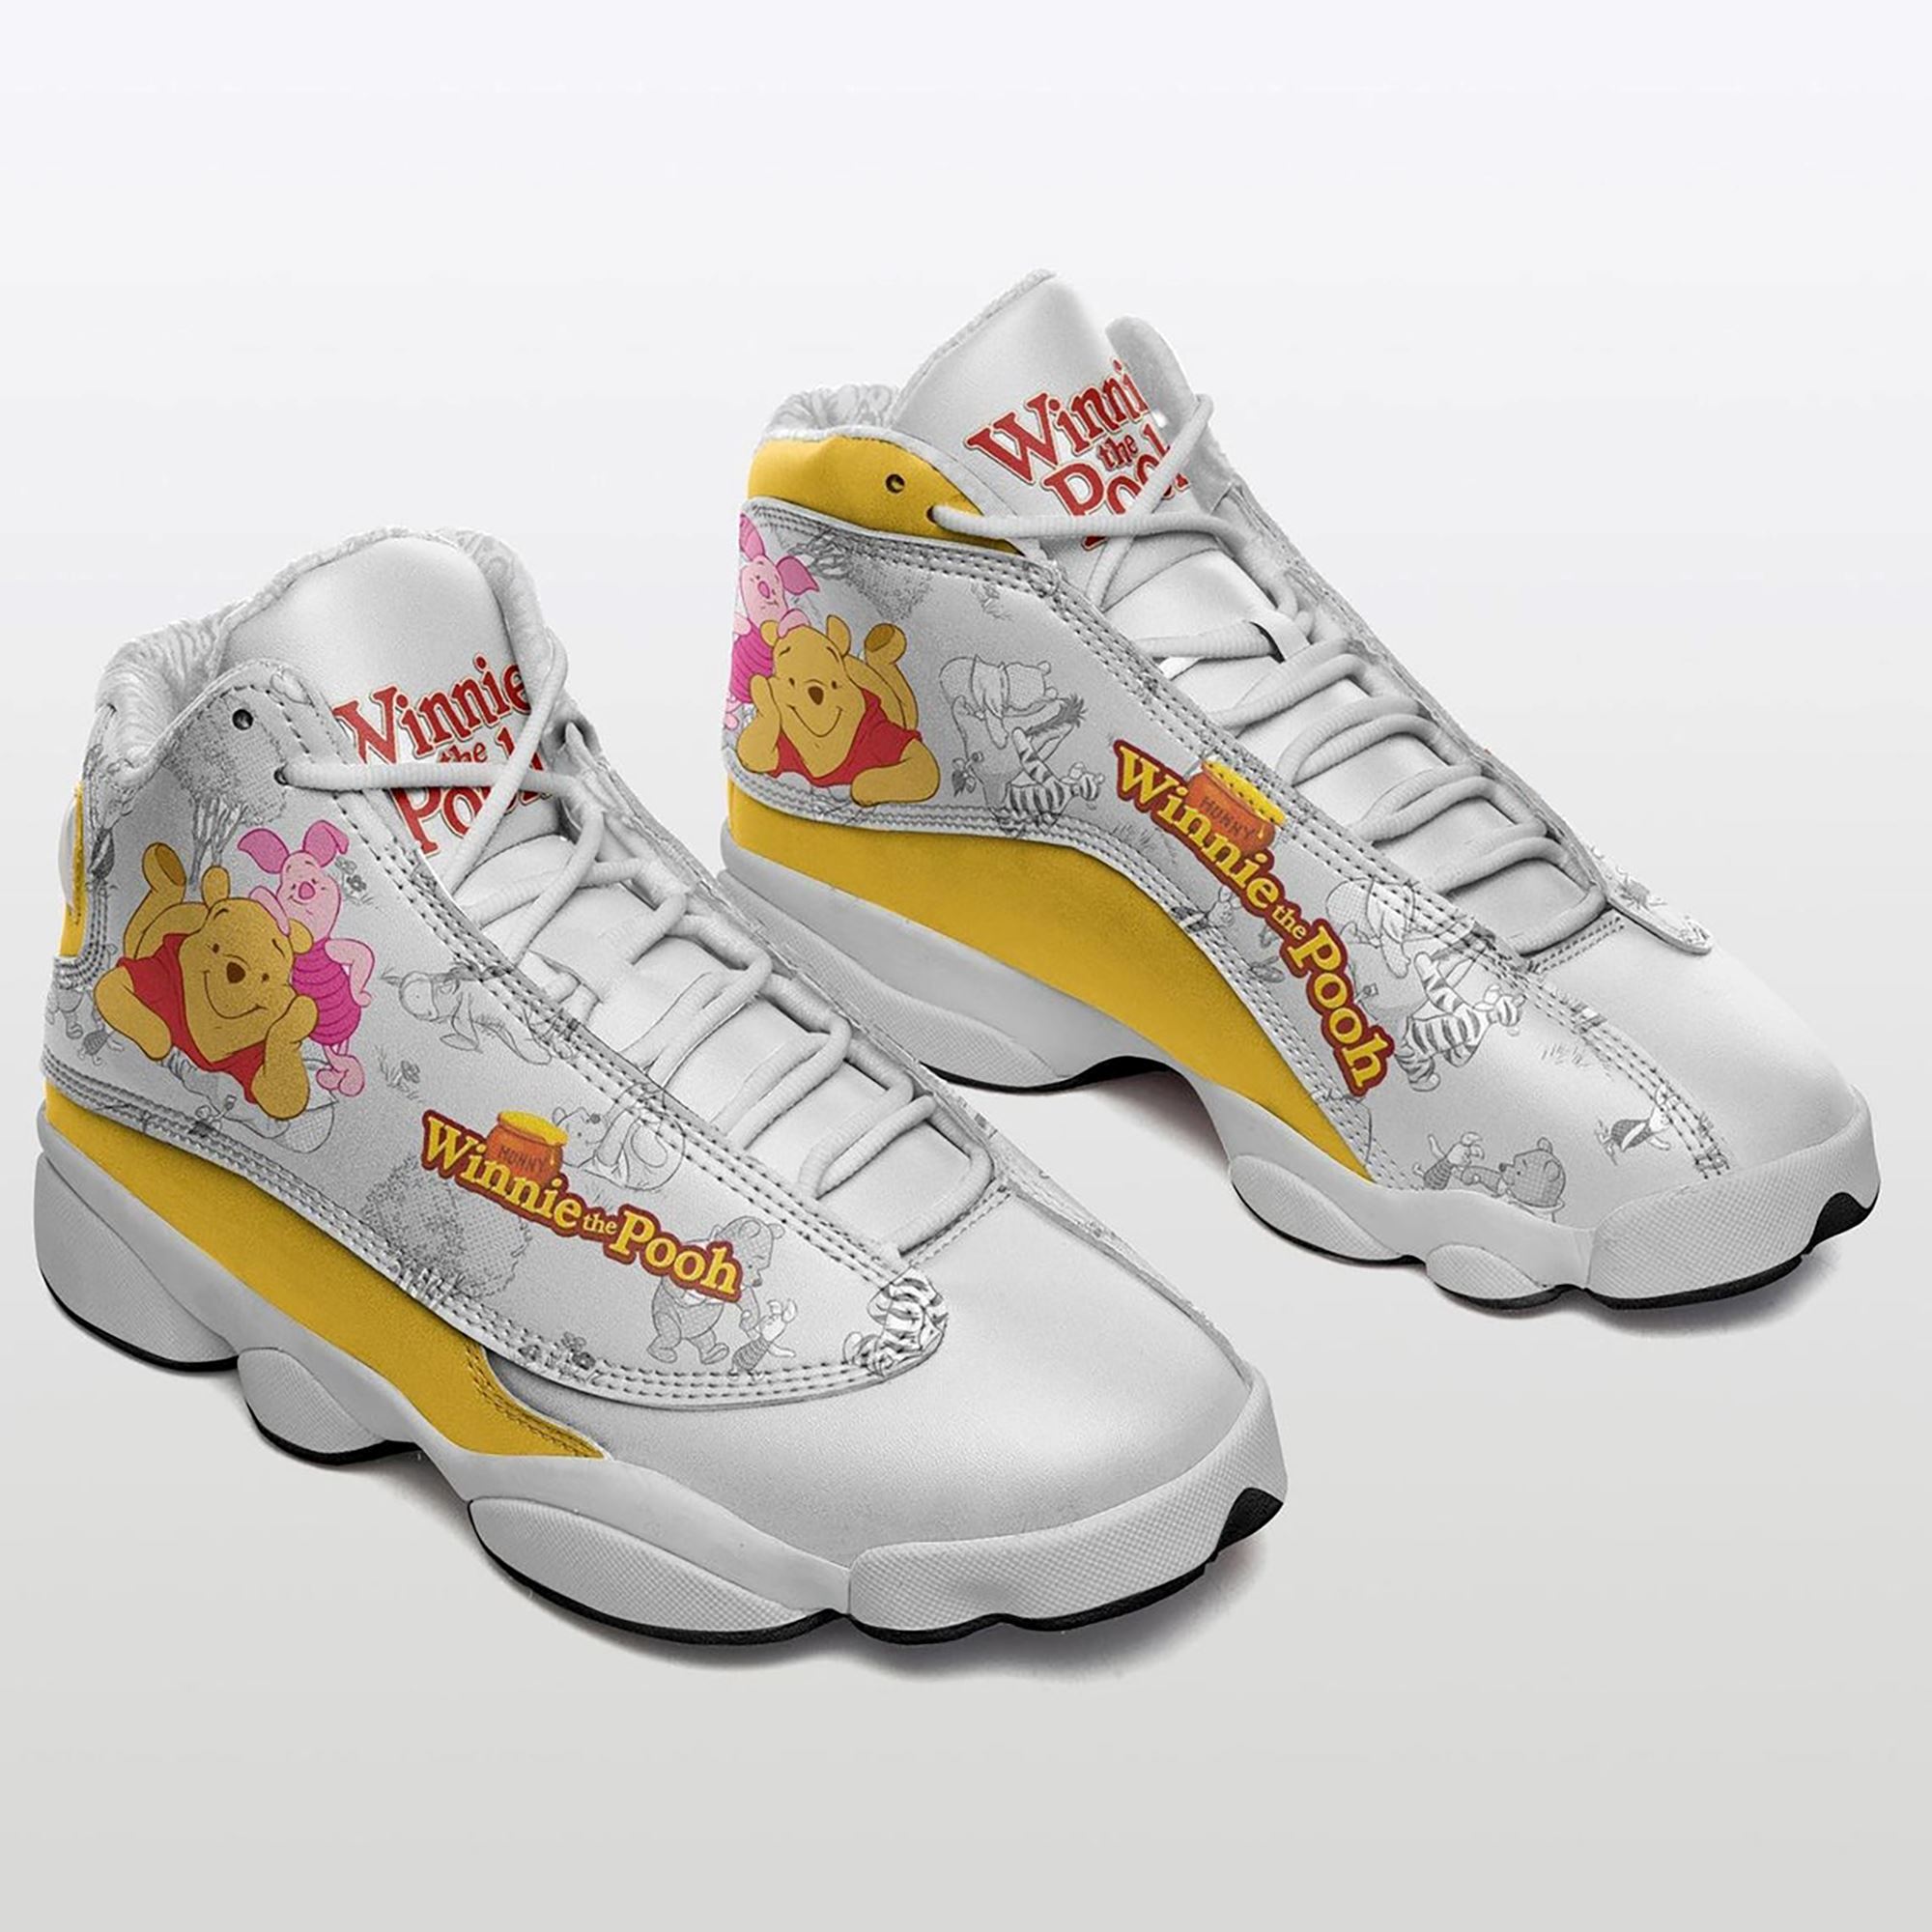 Winnie-the-pooh Air Jordan 13 Shoes Pooh Bear Sport Shoes Winnie The Pooh Leather Shoes Pooh Bear Fans Gift Running Shoes